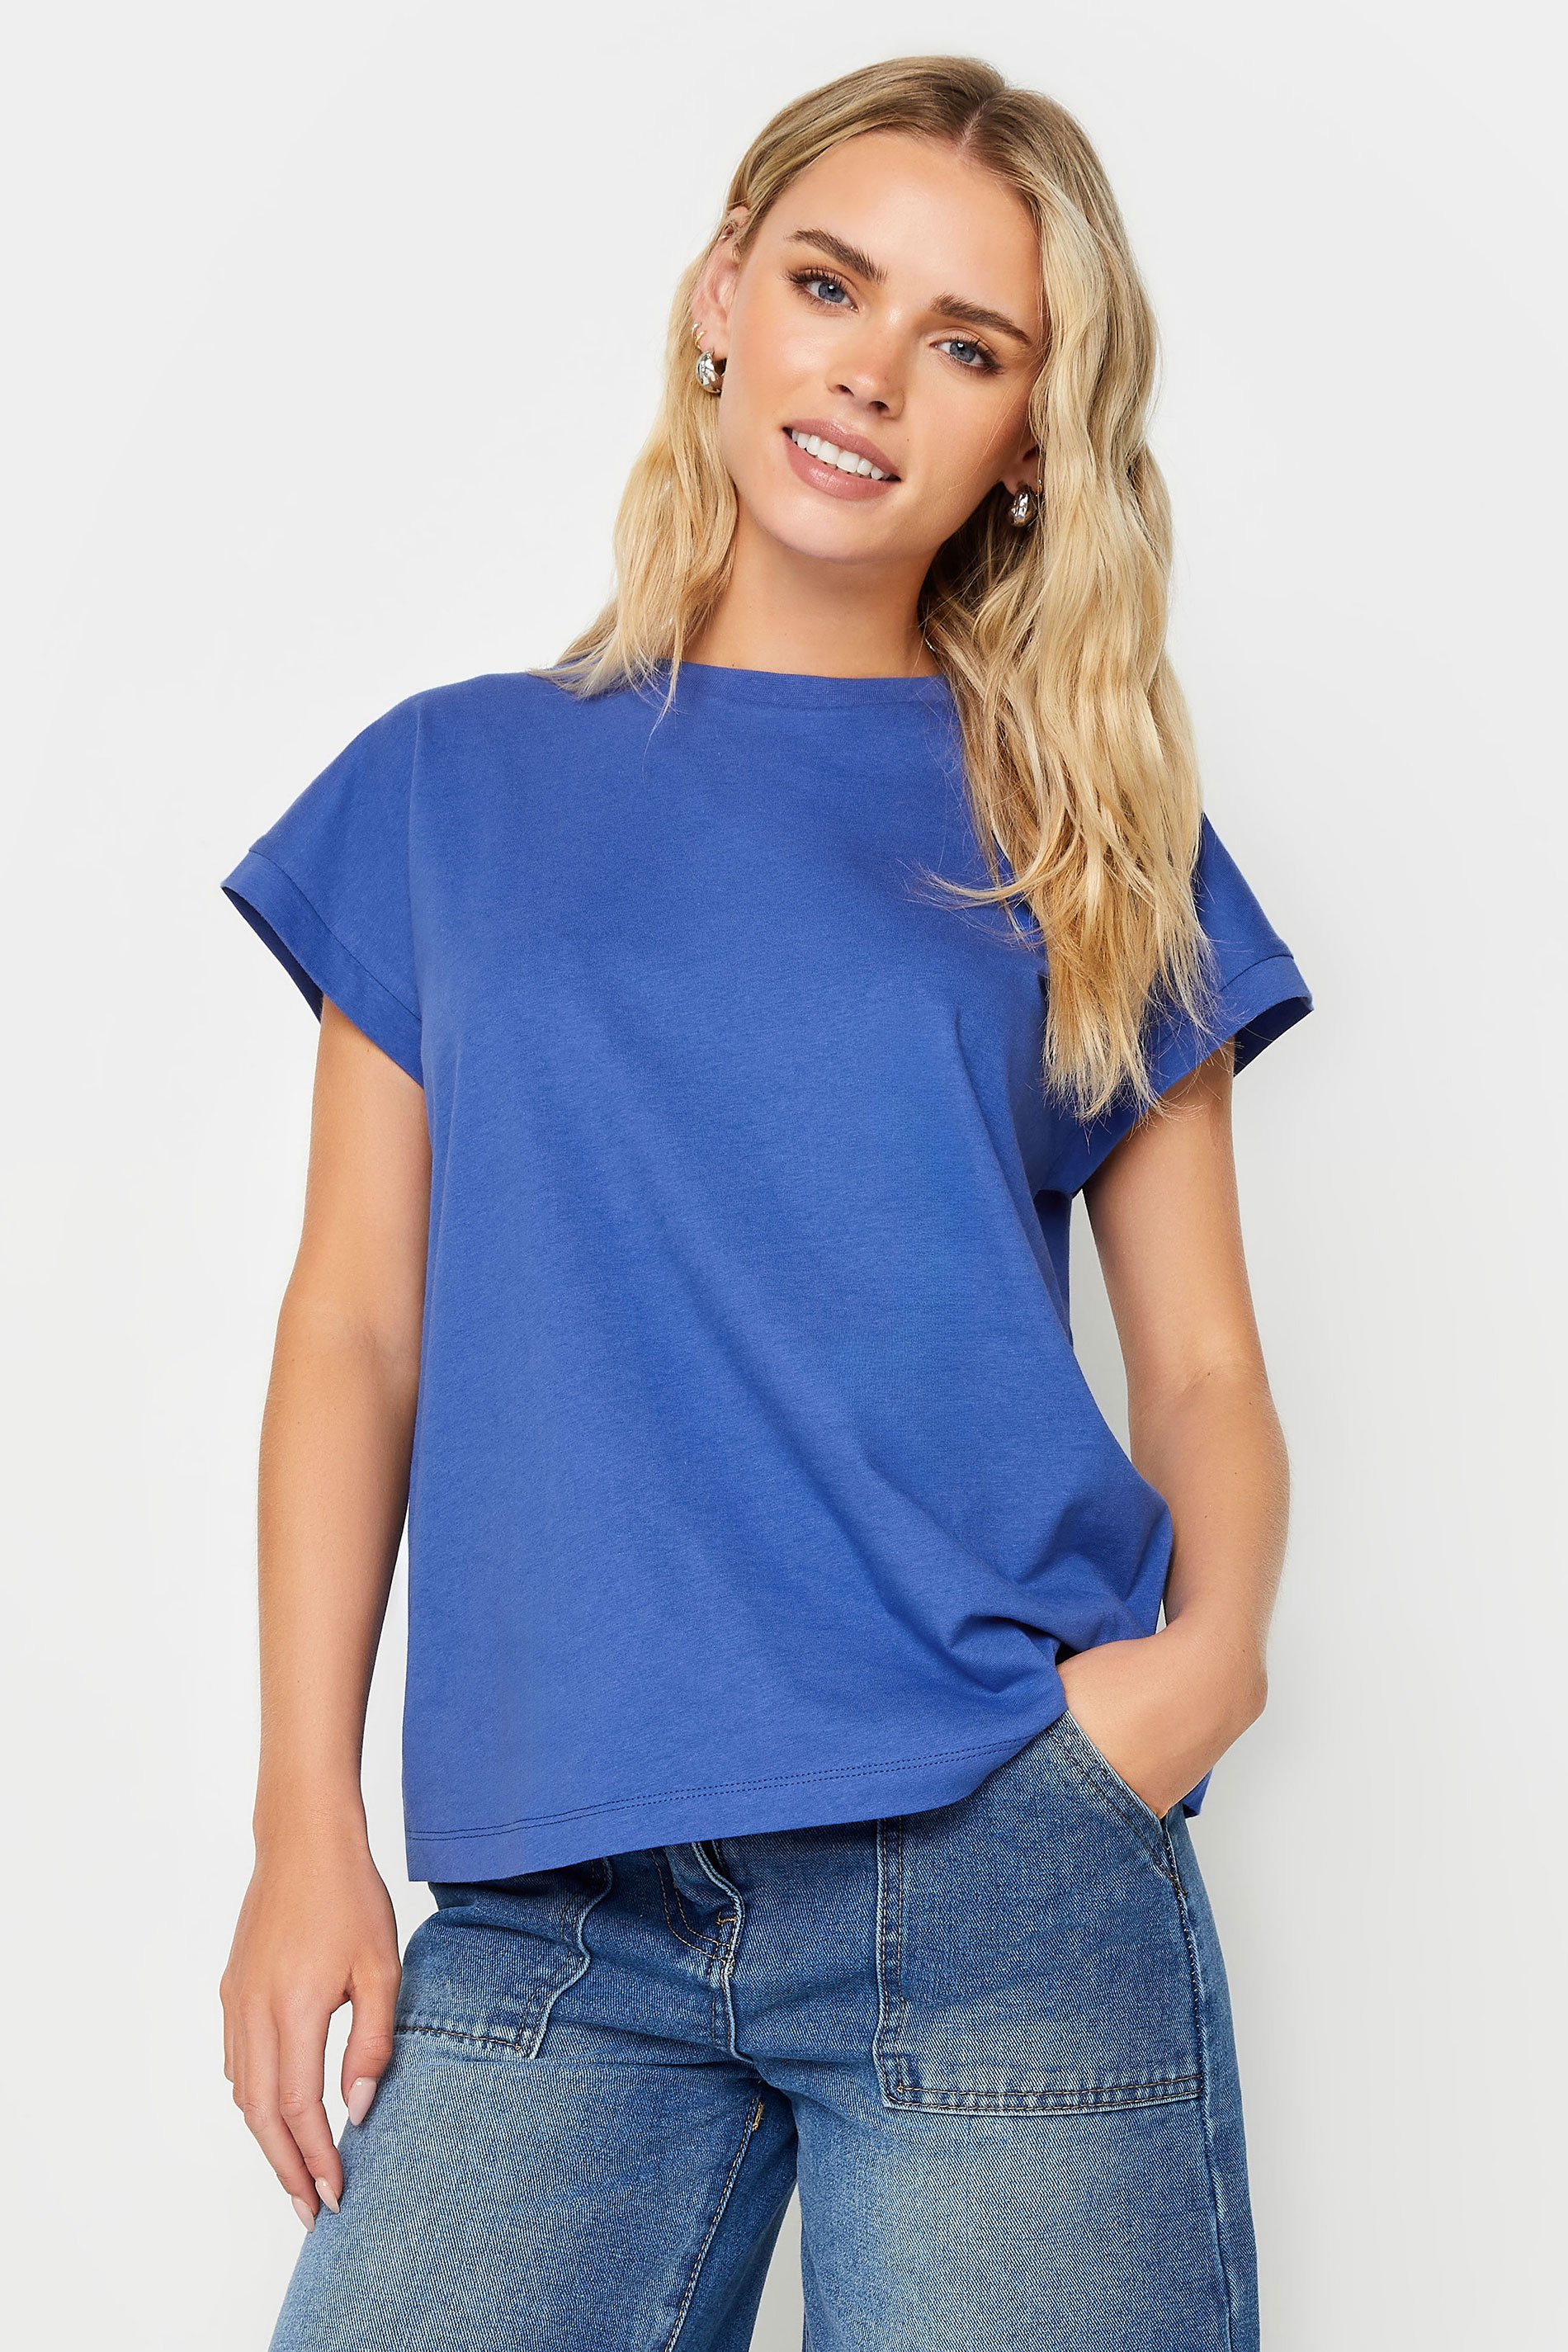 PixieGirl 2 PACK Petite Women's Blue & Black Short Sleeve T-Shirts | PixieGirl 2